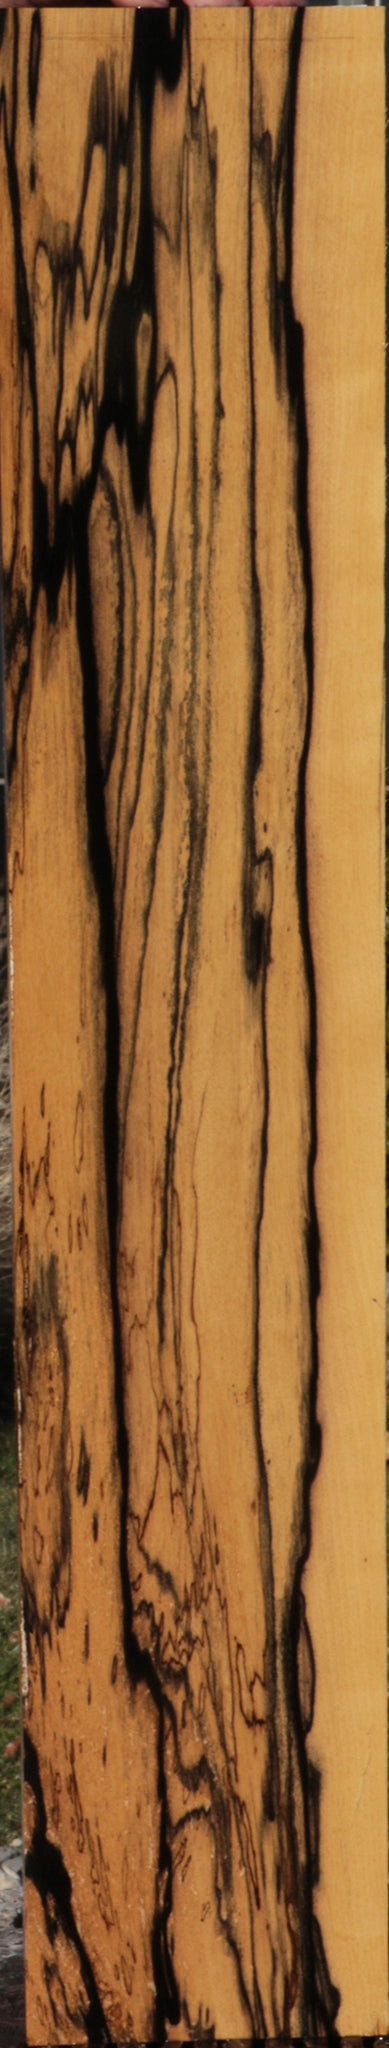 Black & White Ebony Instrument Lumber